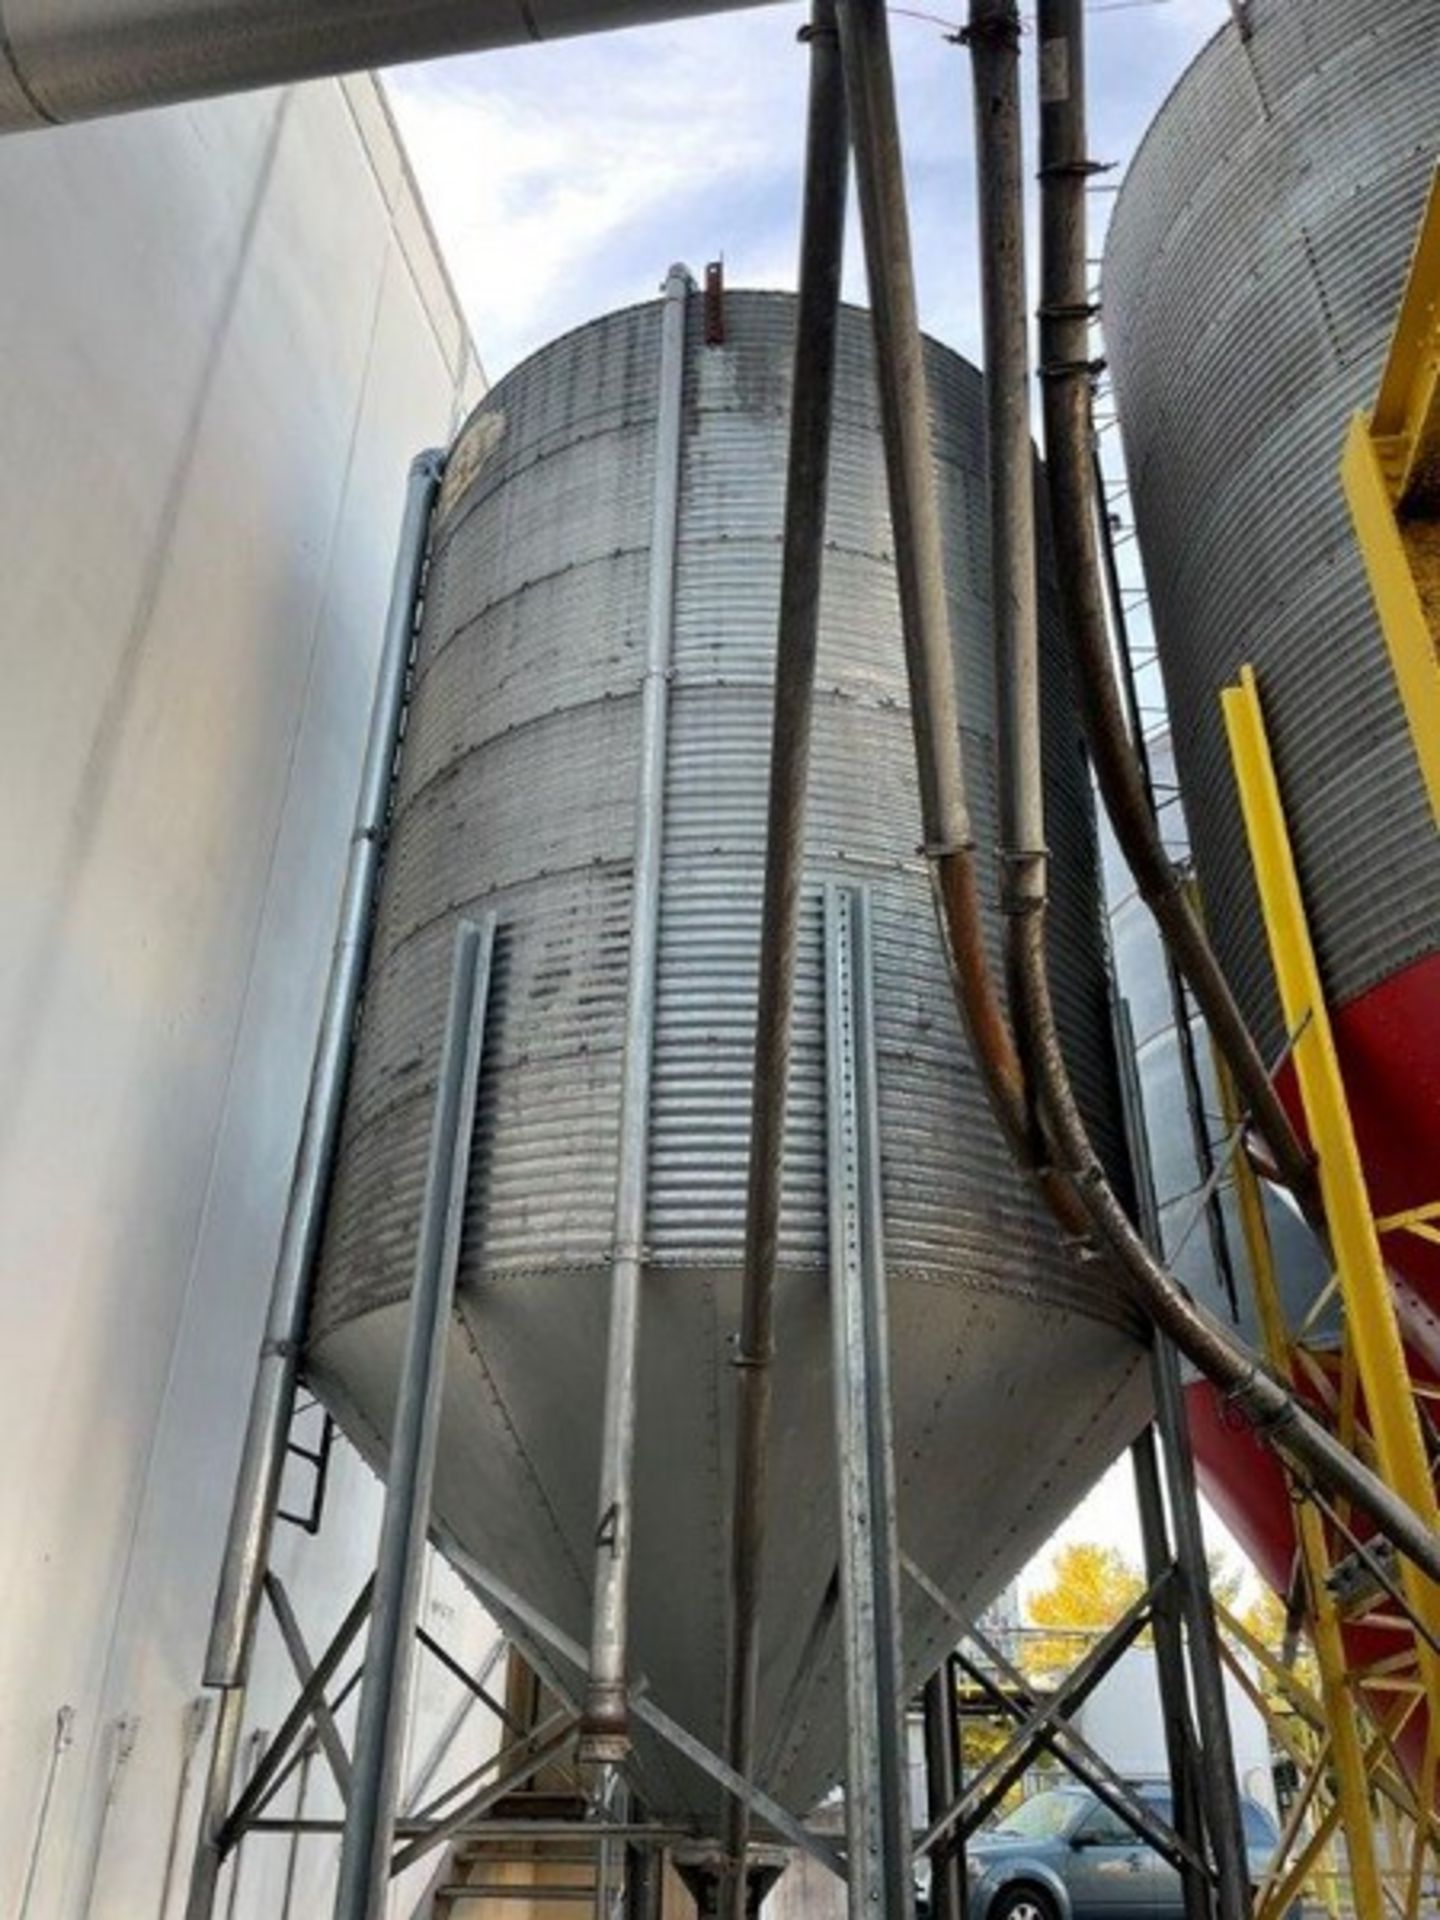 Grain Storage Silo (LOCATED IN FREDERICK, MD) - Image 3 of 3